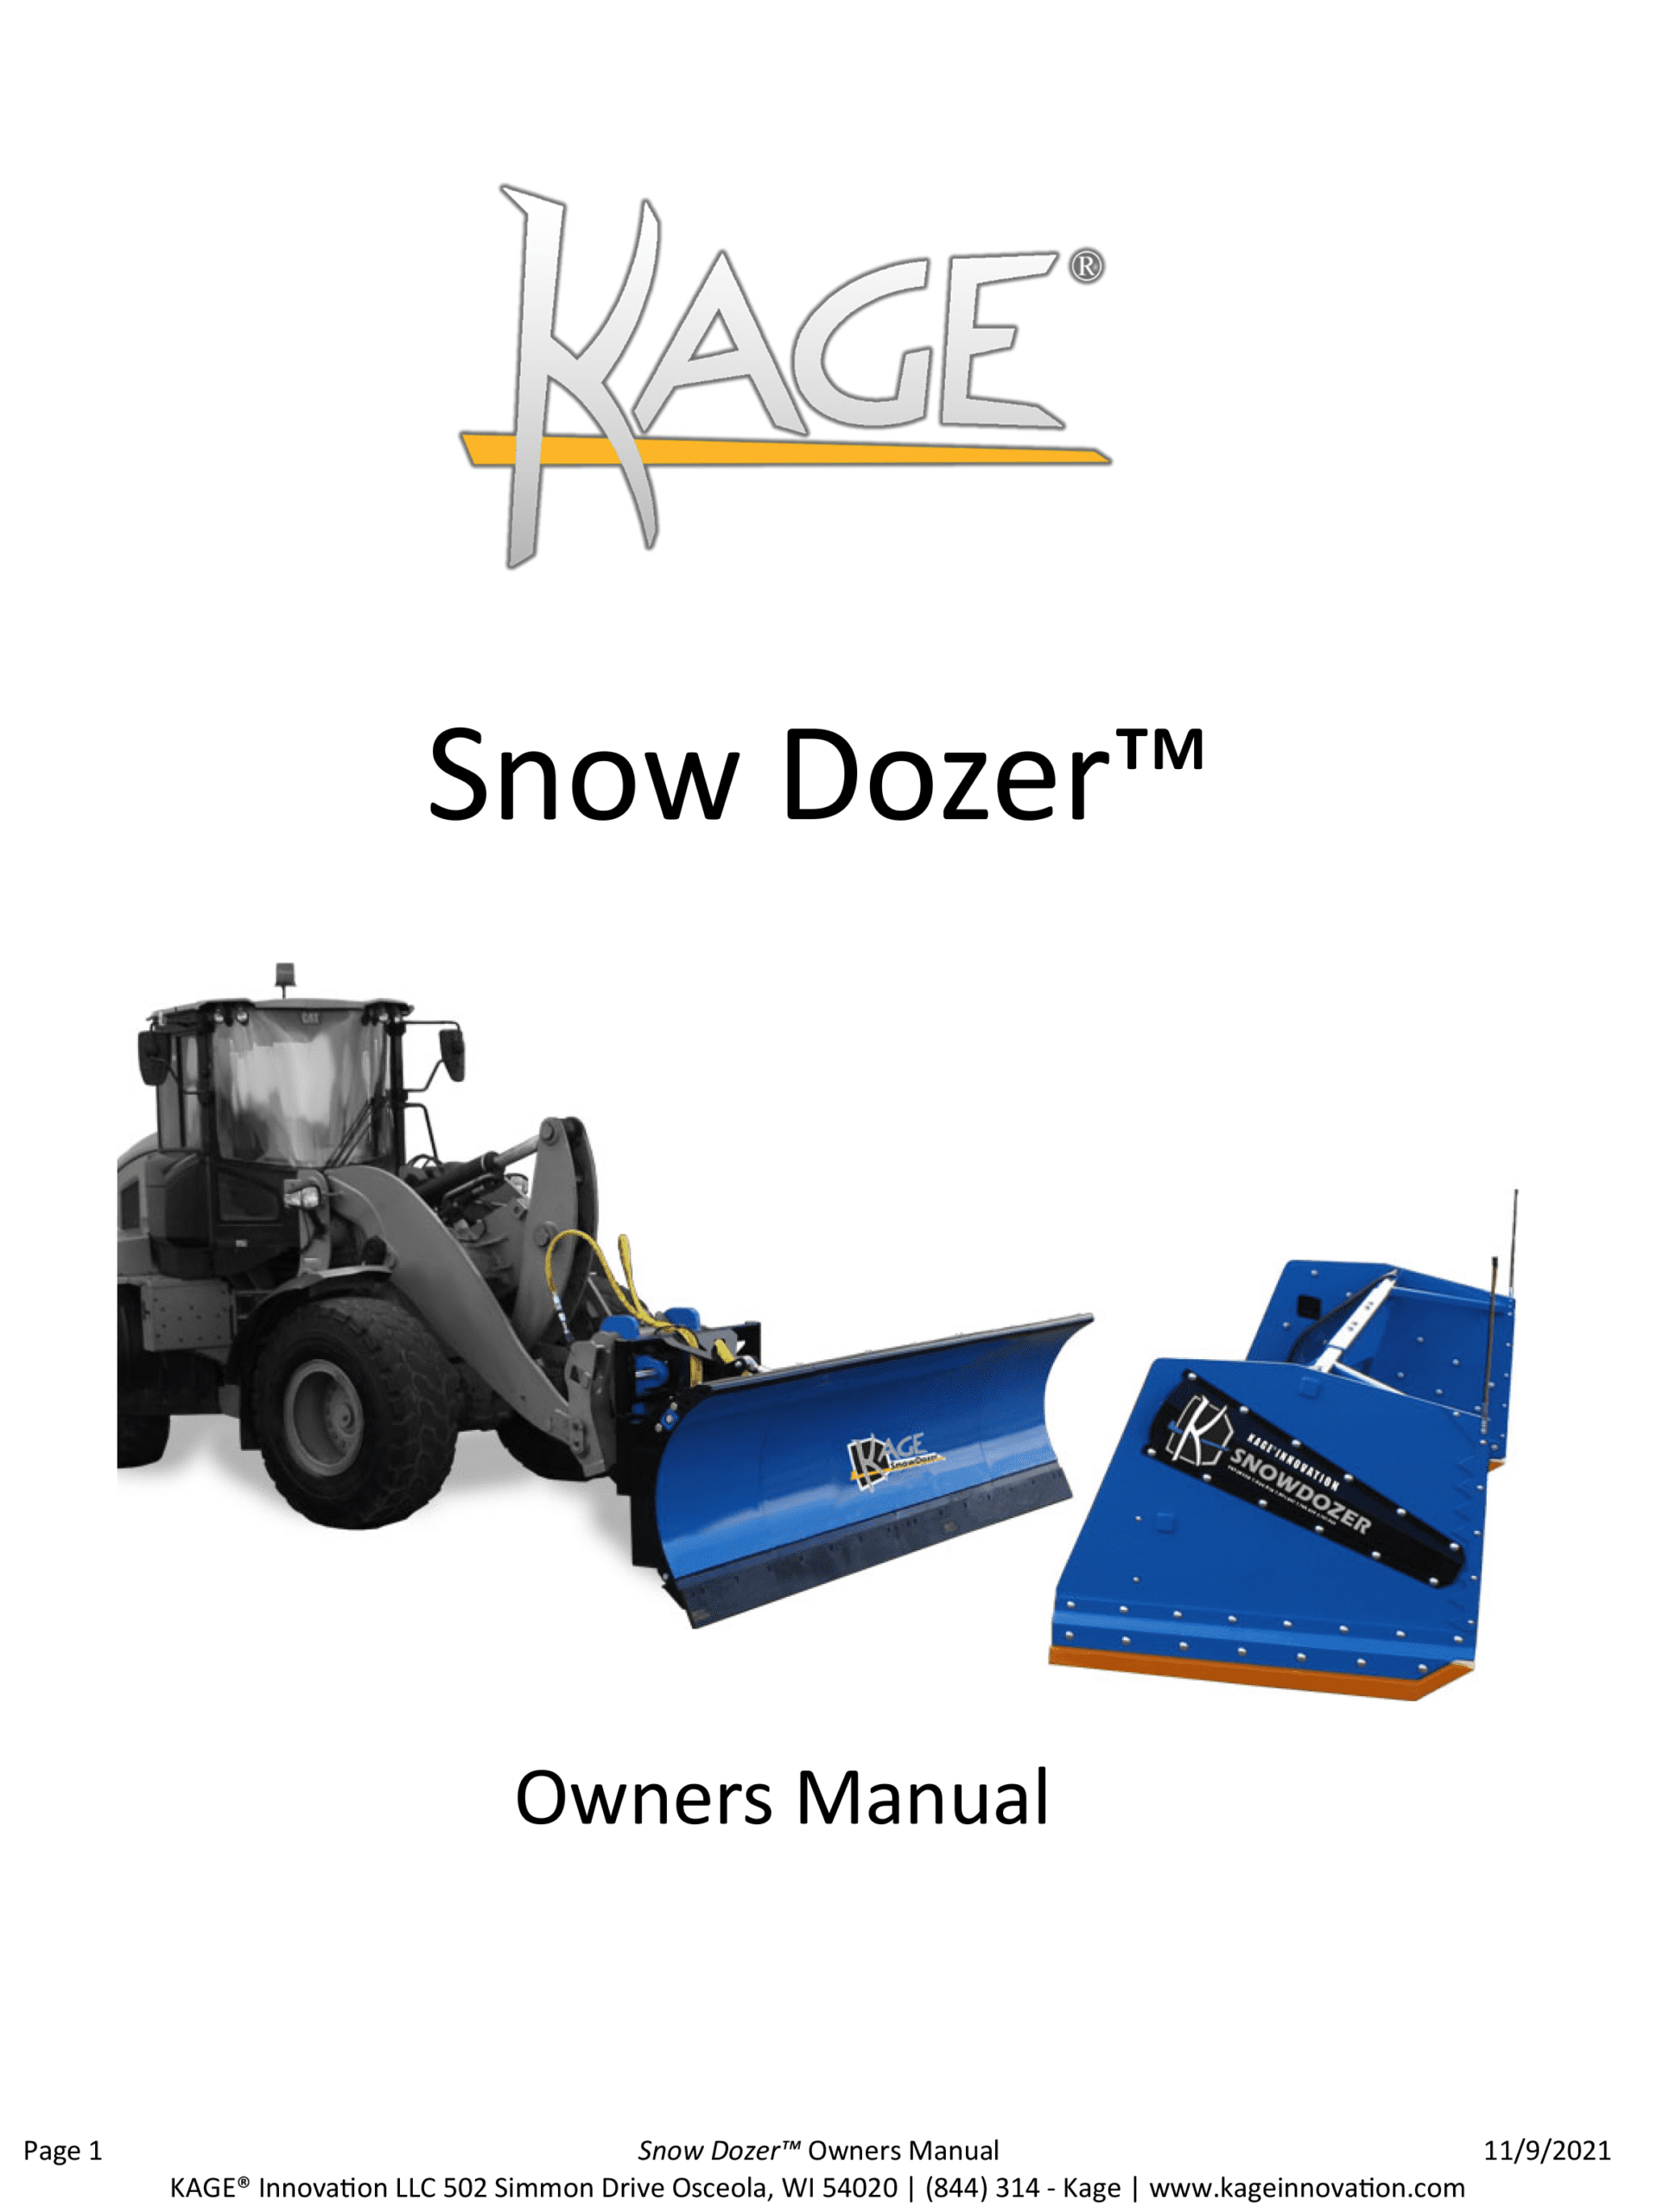 Snow Dozer Owners Manual